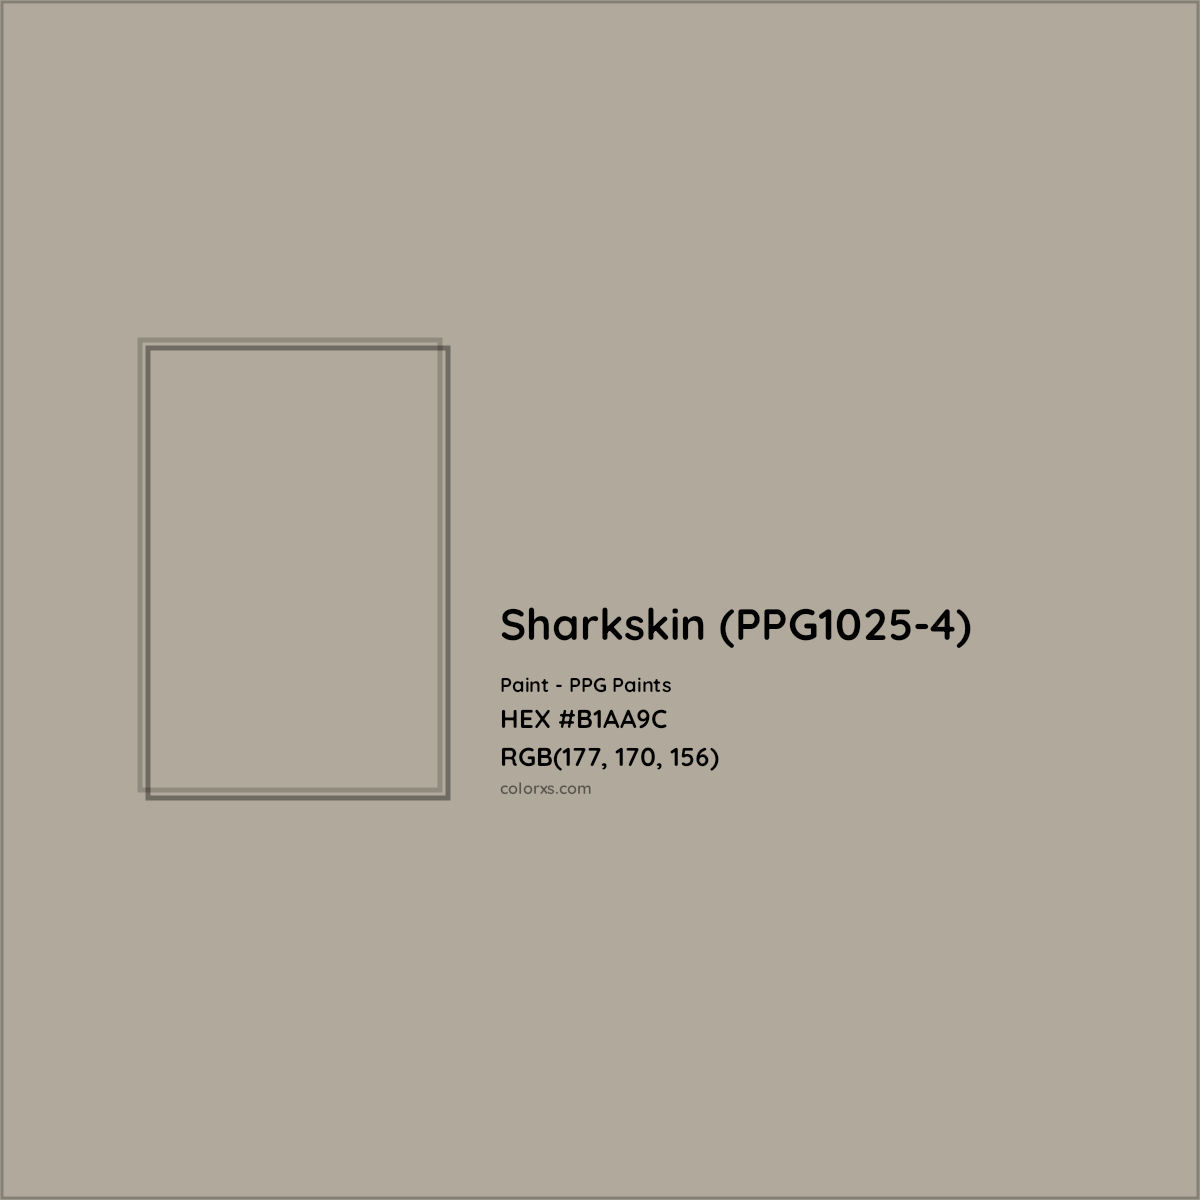 HEX #B1AA9C Sharkskin (PPG1025-4) Paint PPG Paints - Color Code